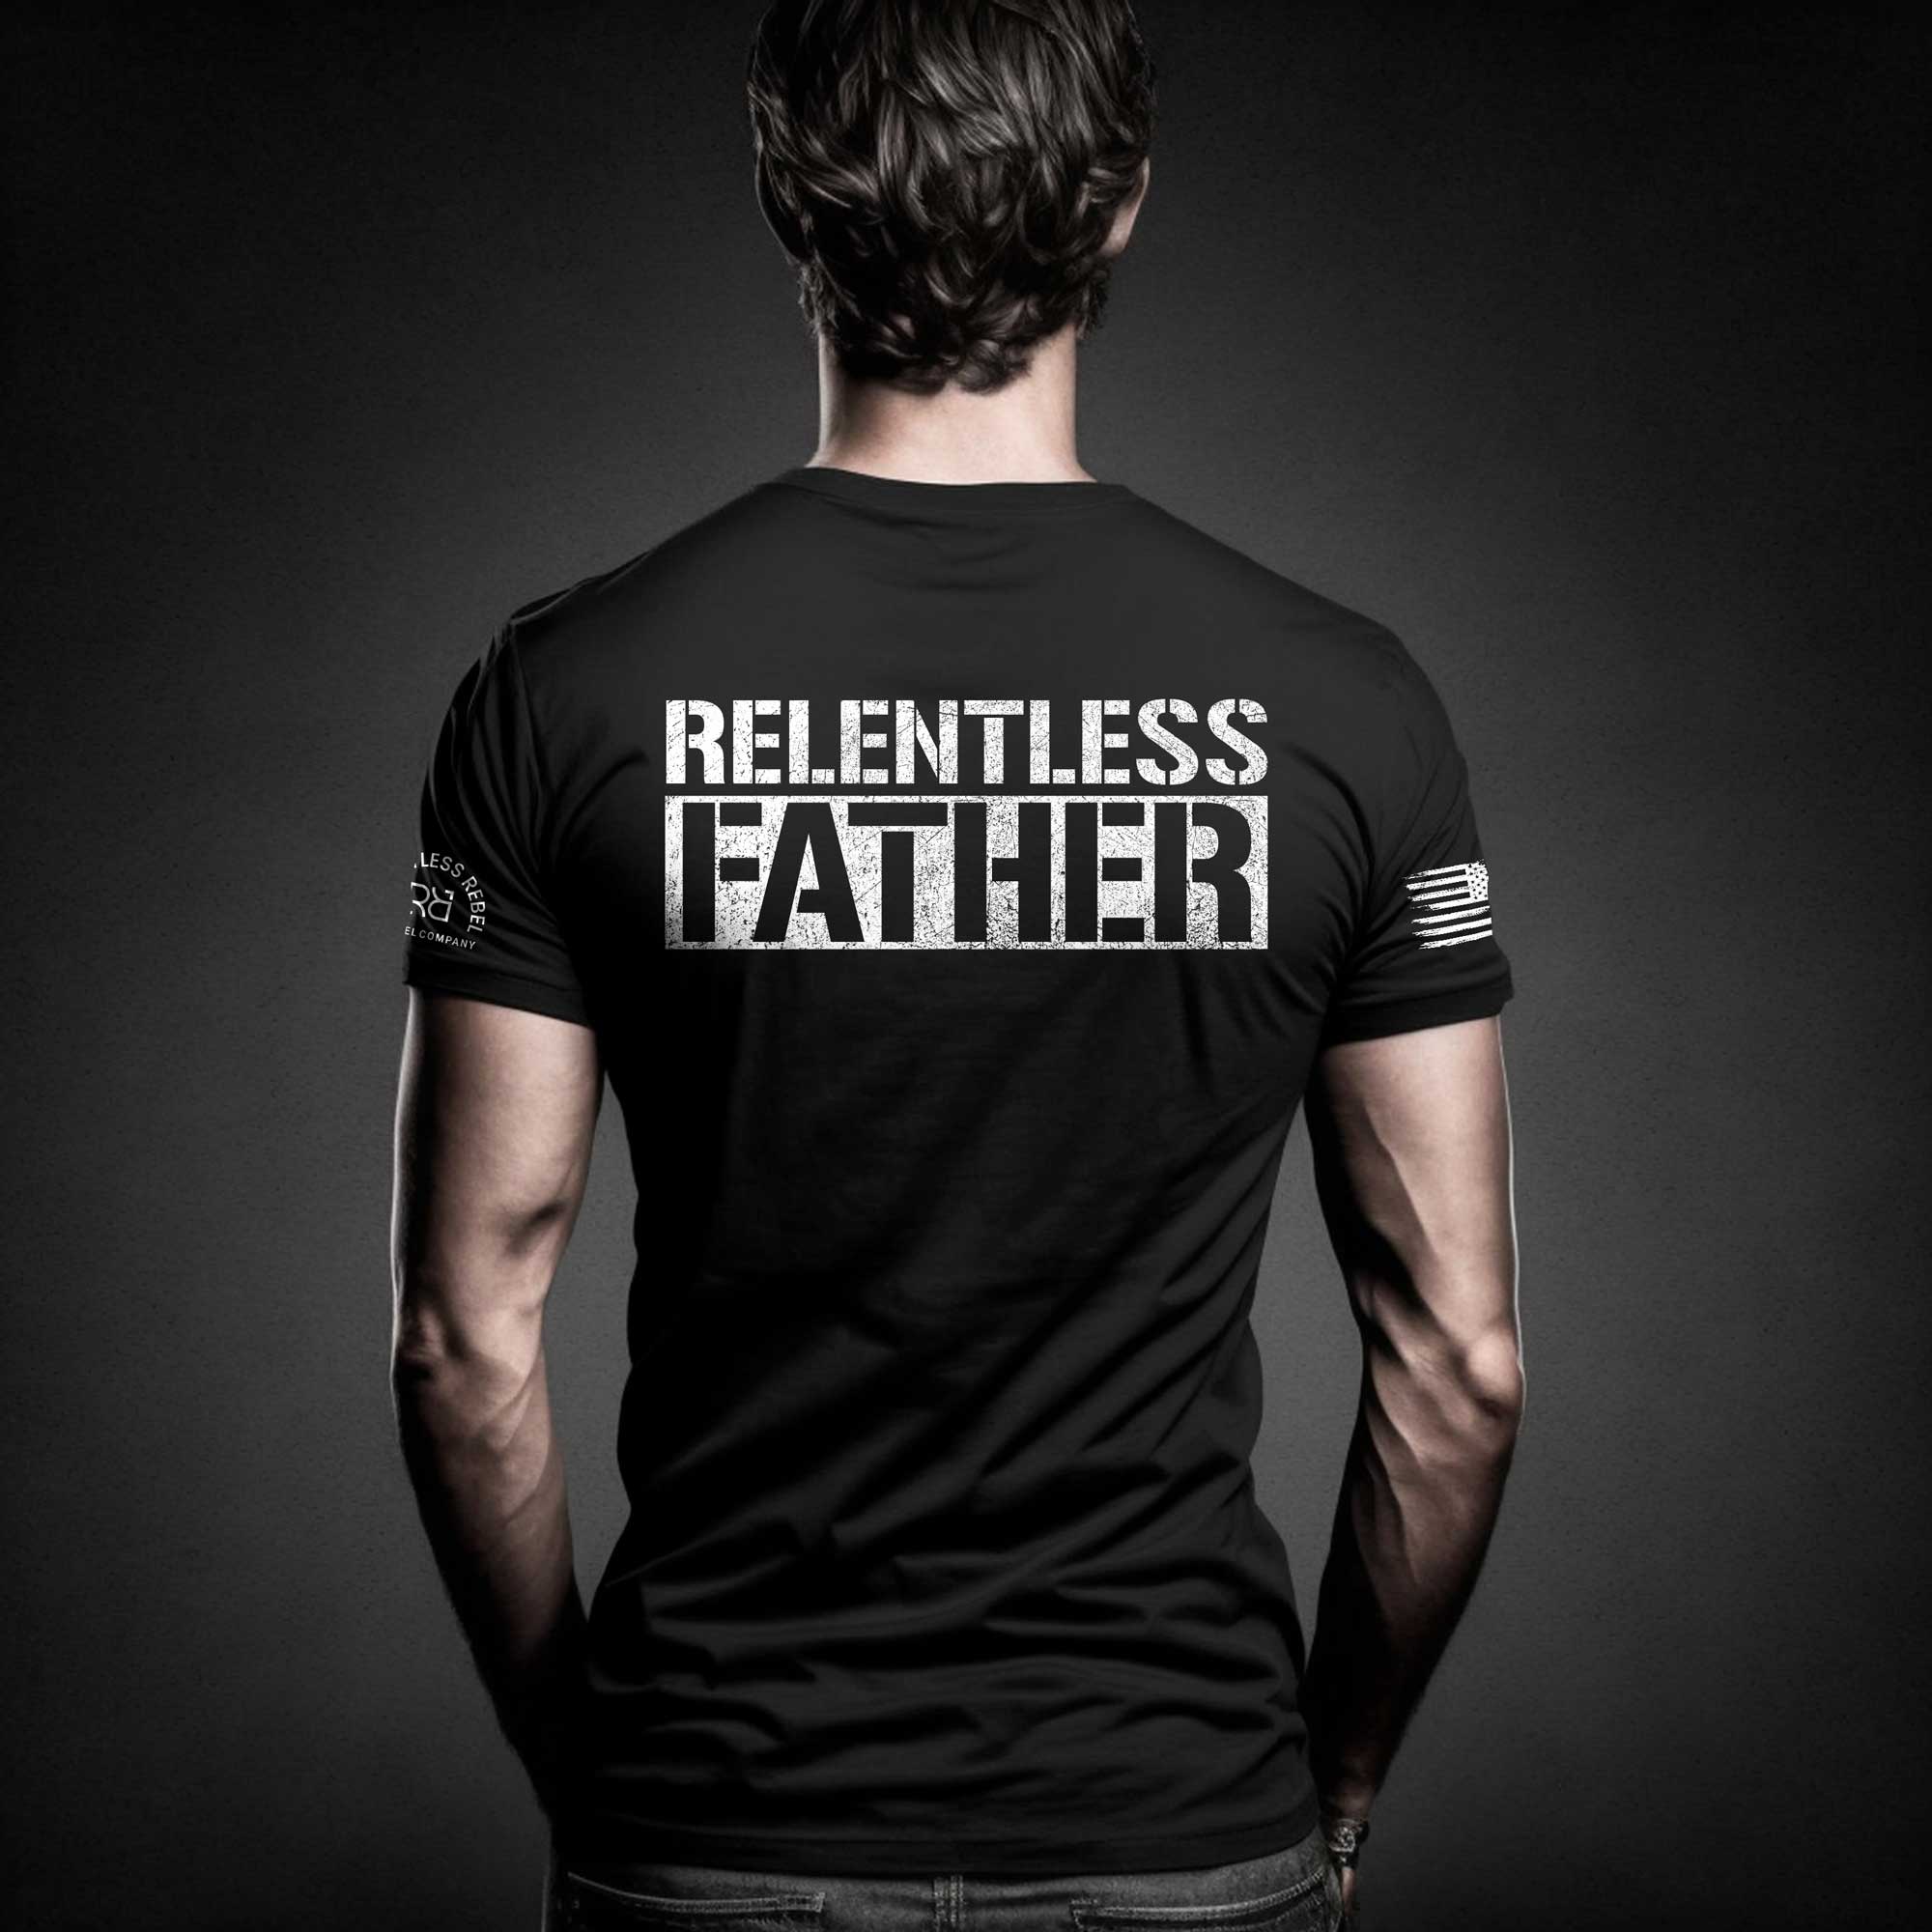 Relentless Father back design t-shirt